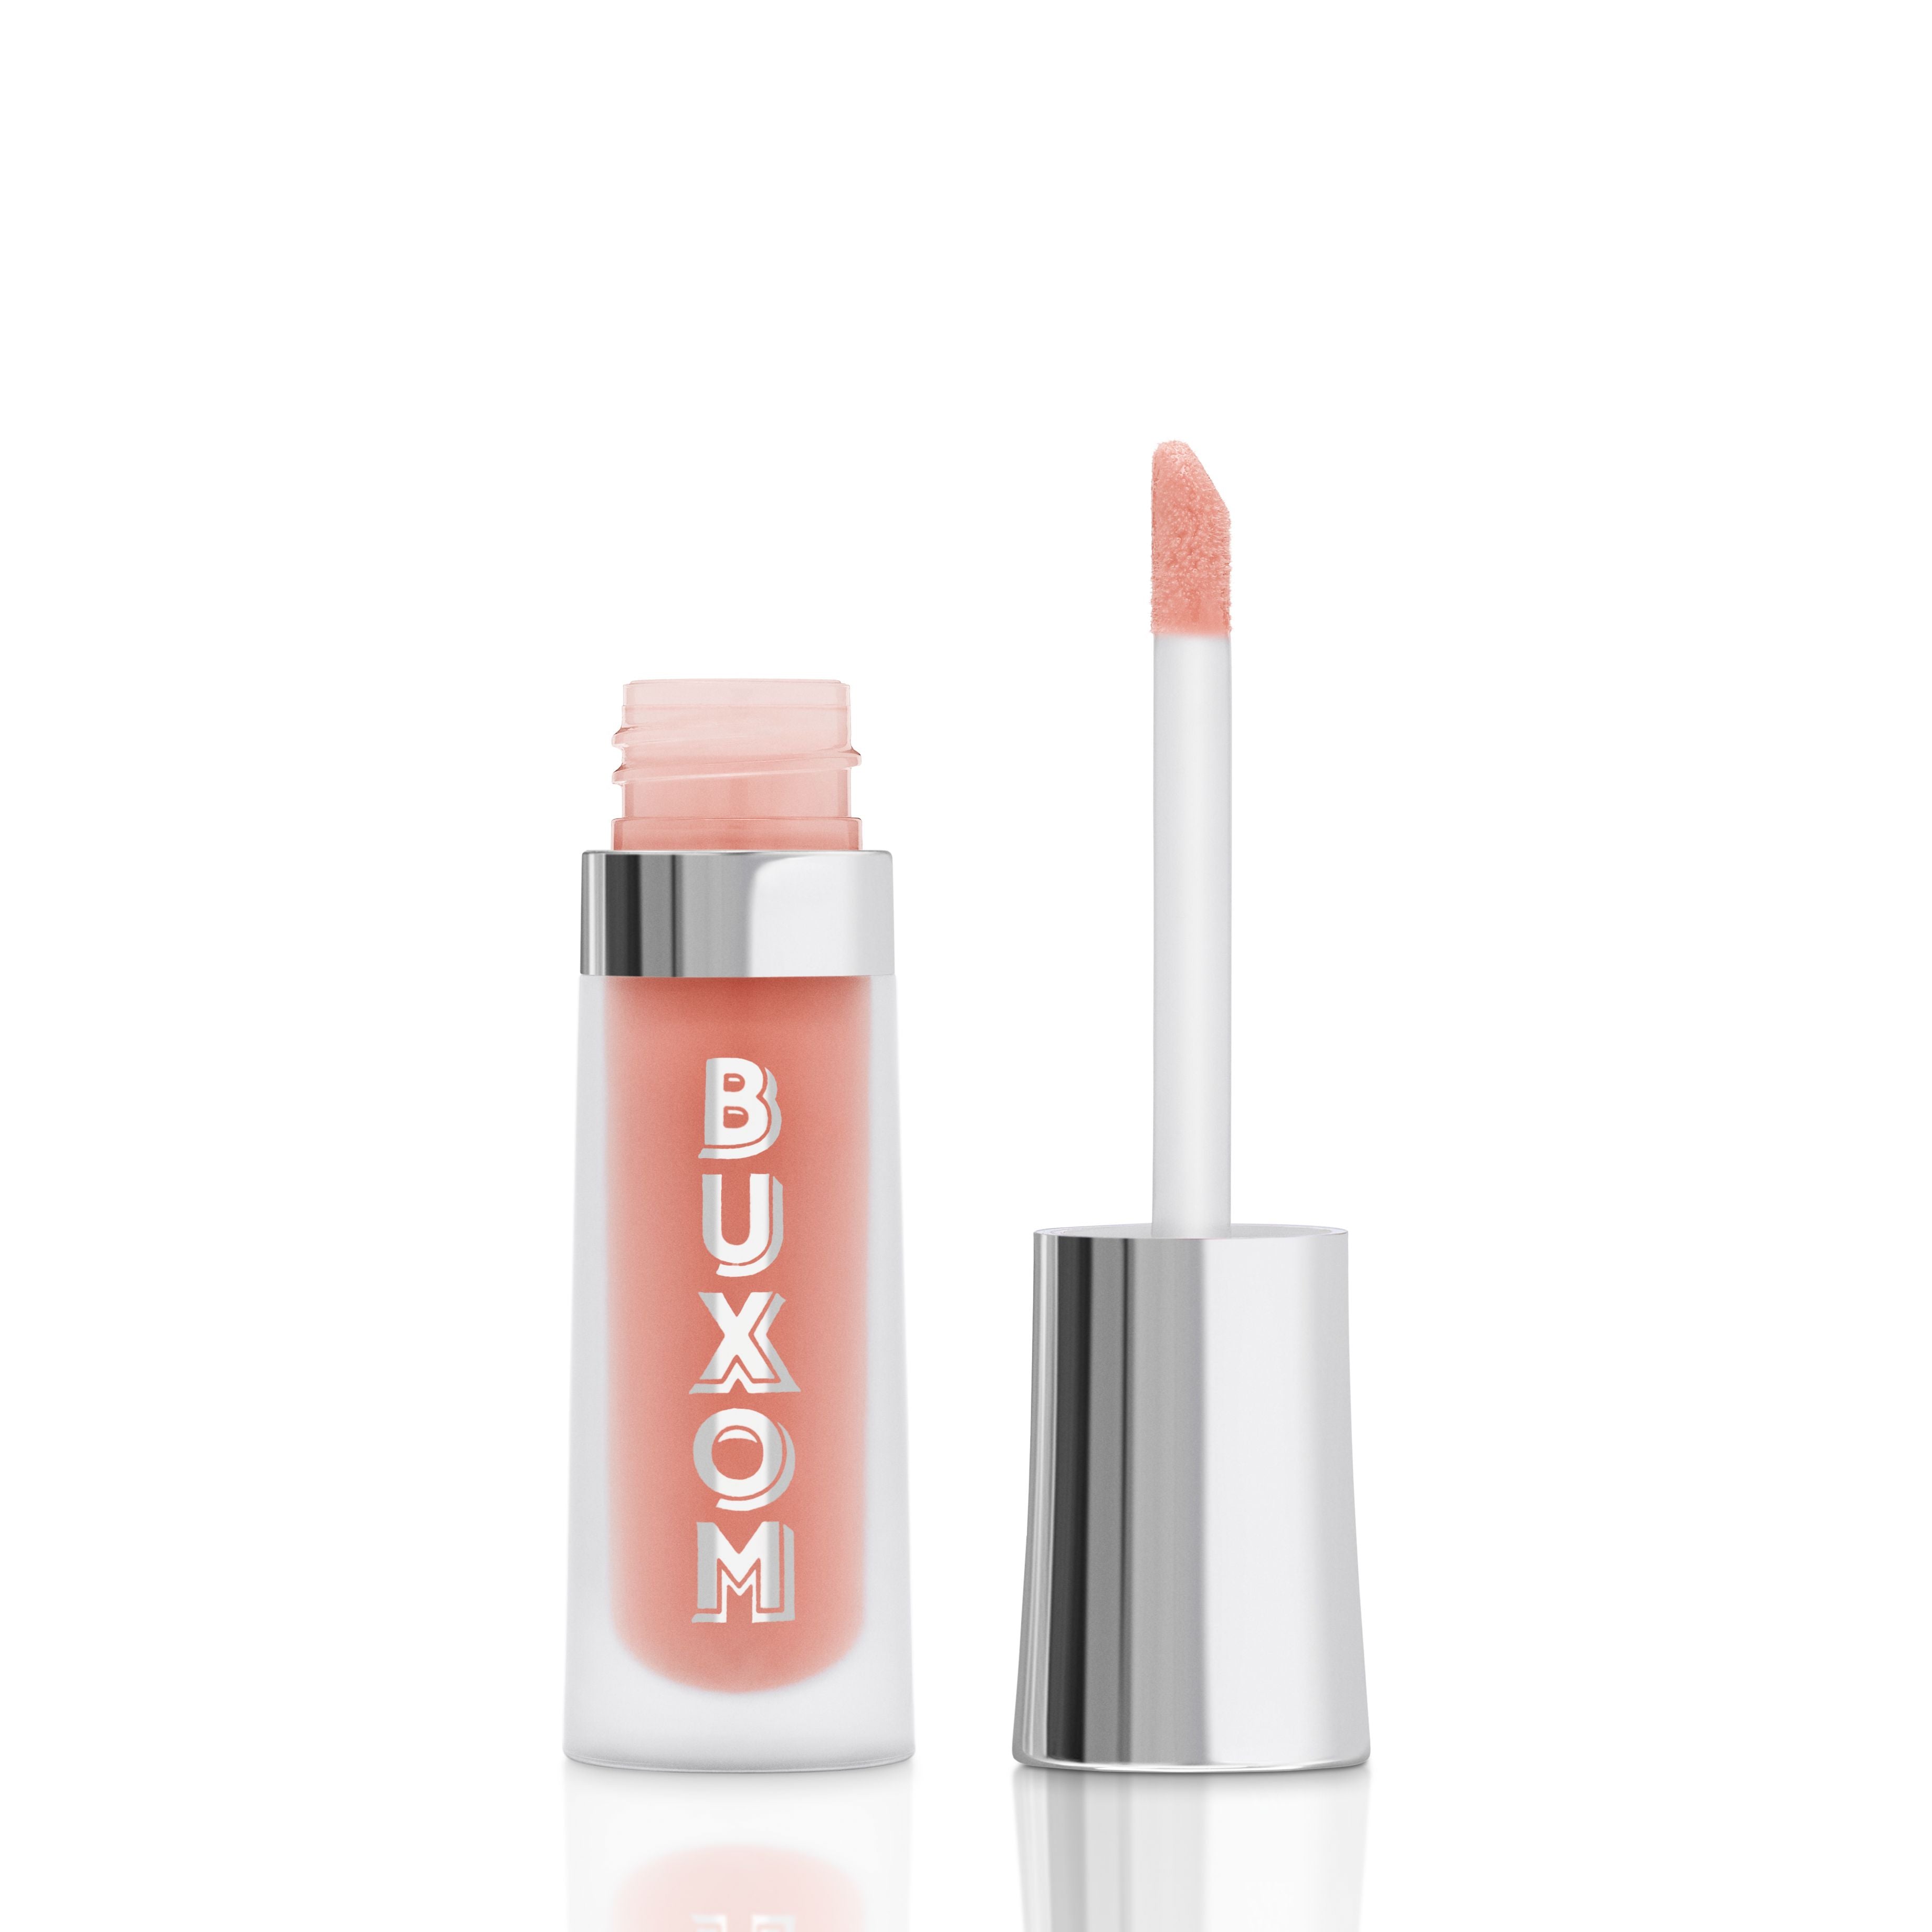 Mini Full-On™ Plumping Lip Cream